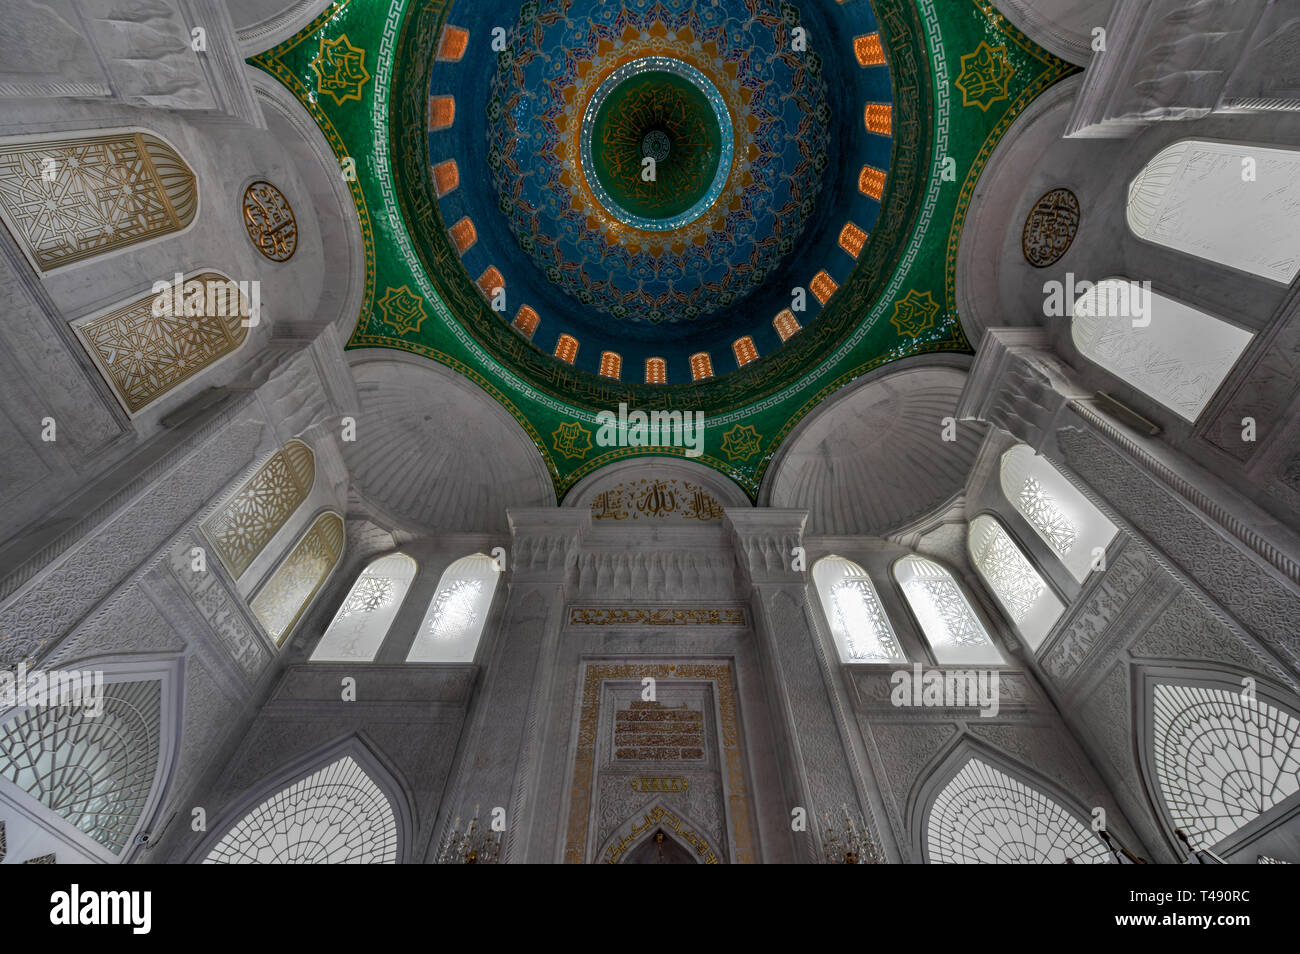 Baku, Azerbaijan - Jul 14, 2018: The Bibi-Heybat Mosque is a historical mosque in Baku, Azerbaijan. The existing structure, built in the 1990s, is a r Stock Photo